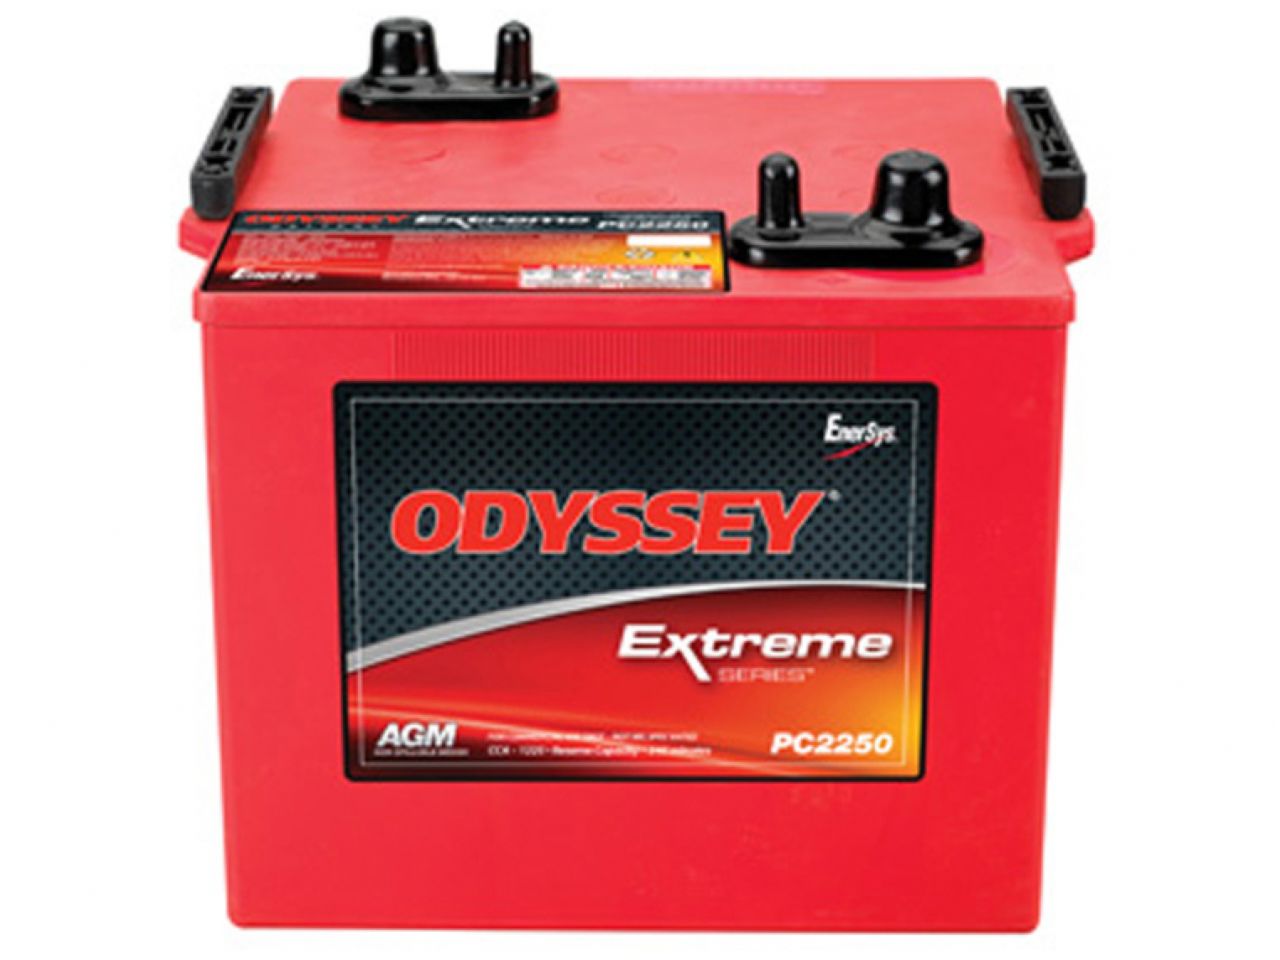 Odyssey Batteries PC2250 Item Image